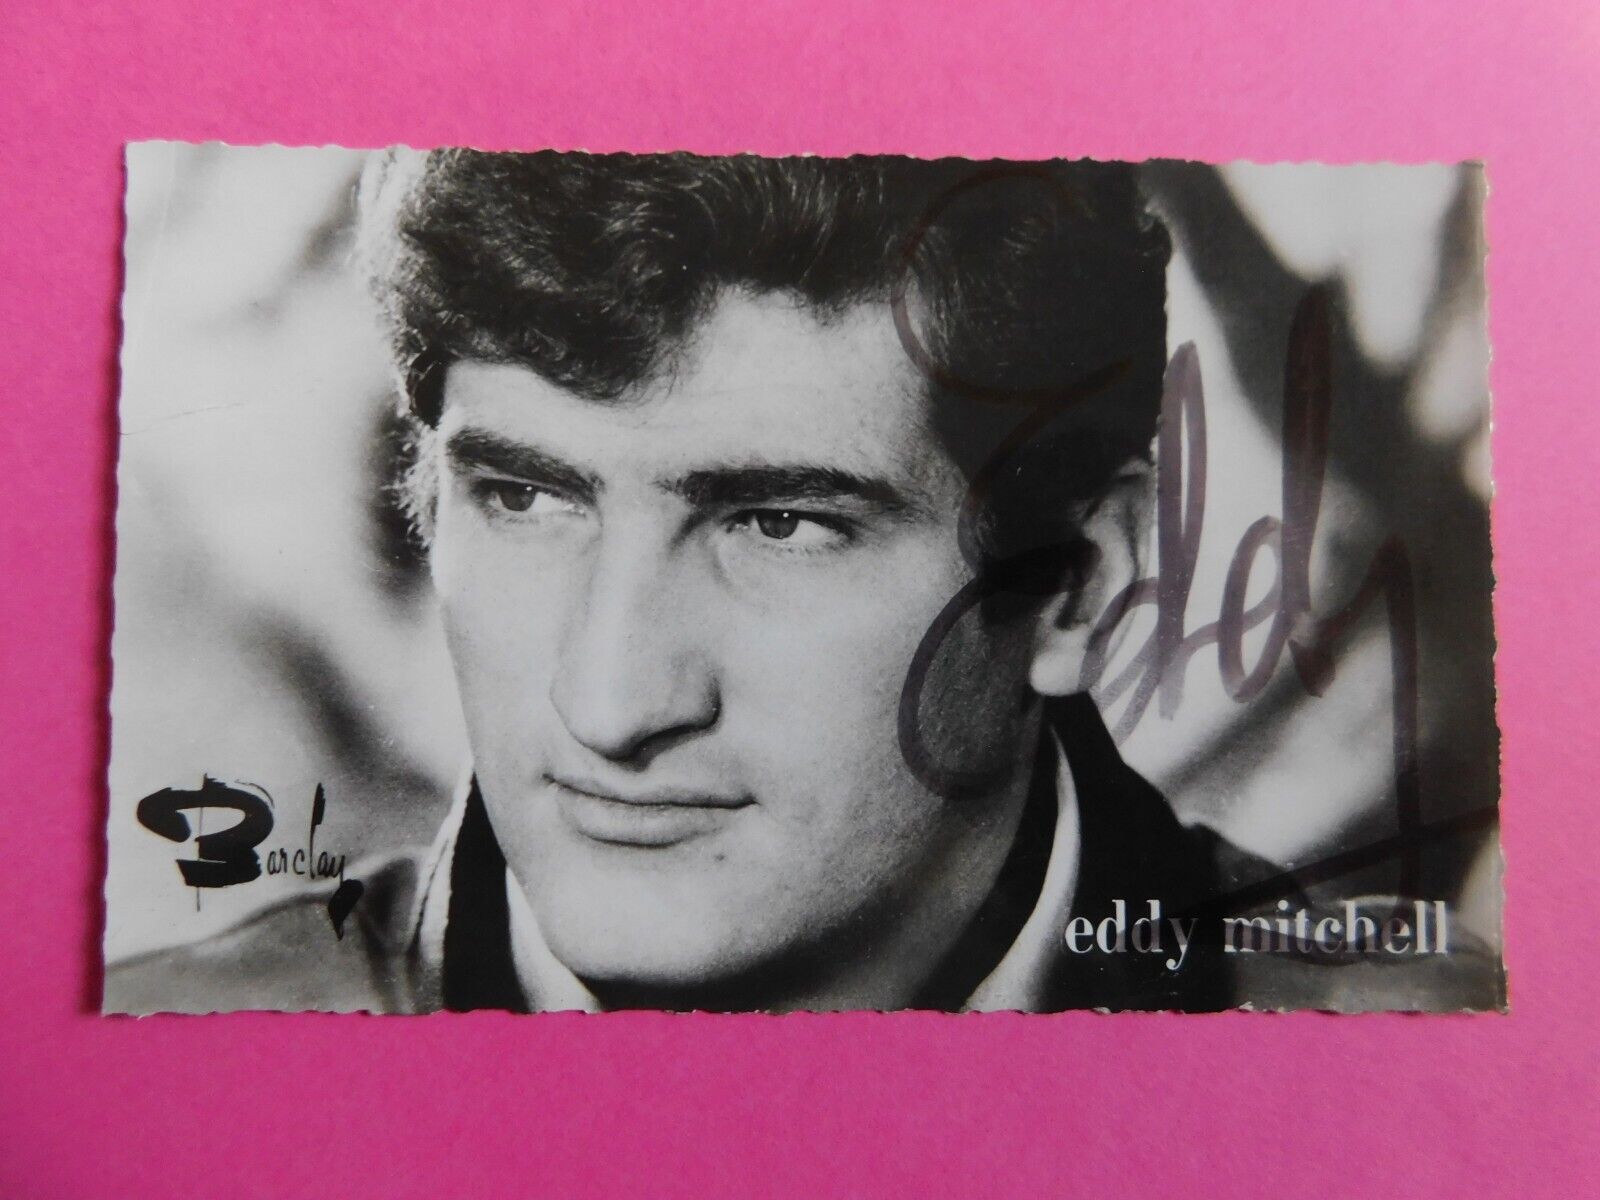 Eddy MITCHELL SIGNED AUTOGRAPH CARD 14cm x 9cm